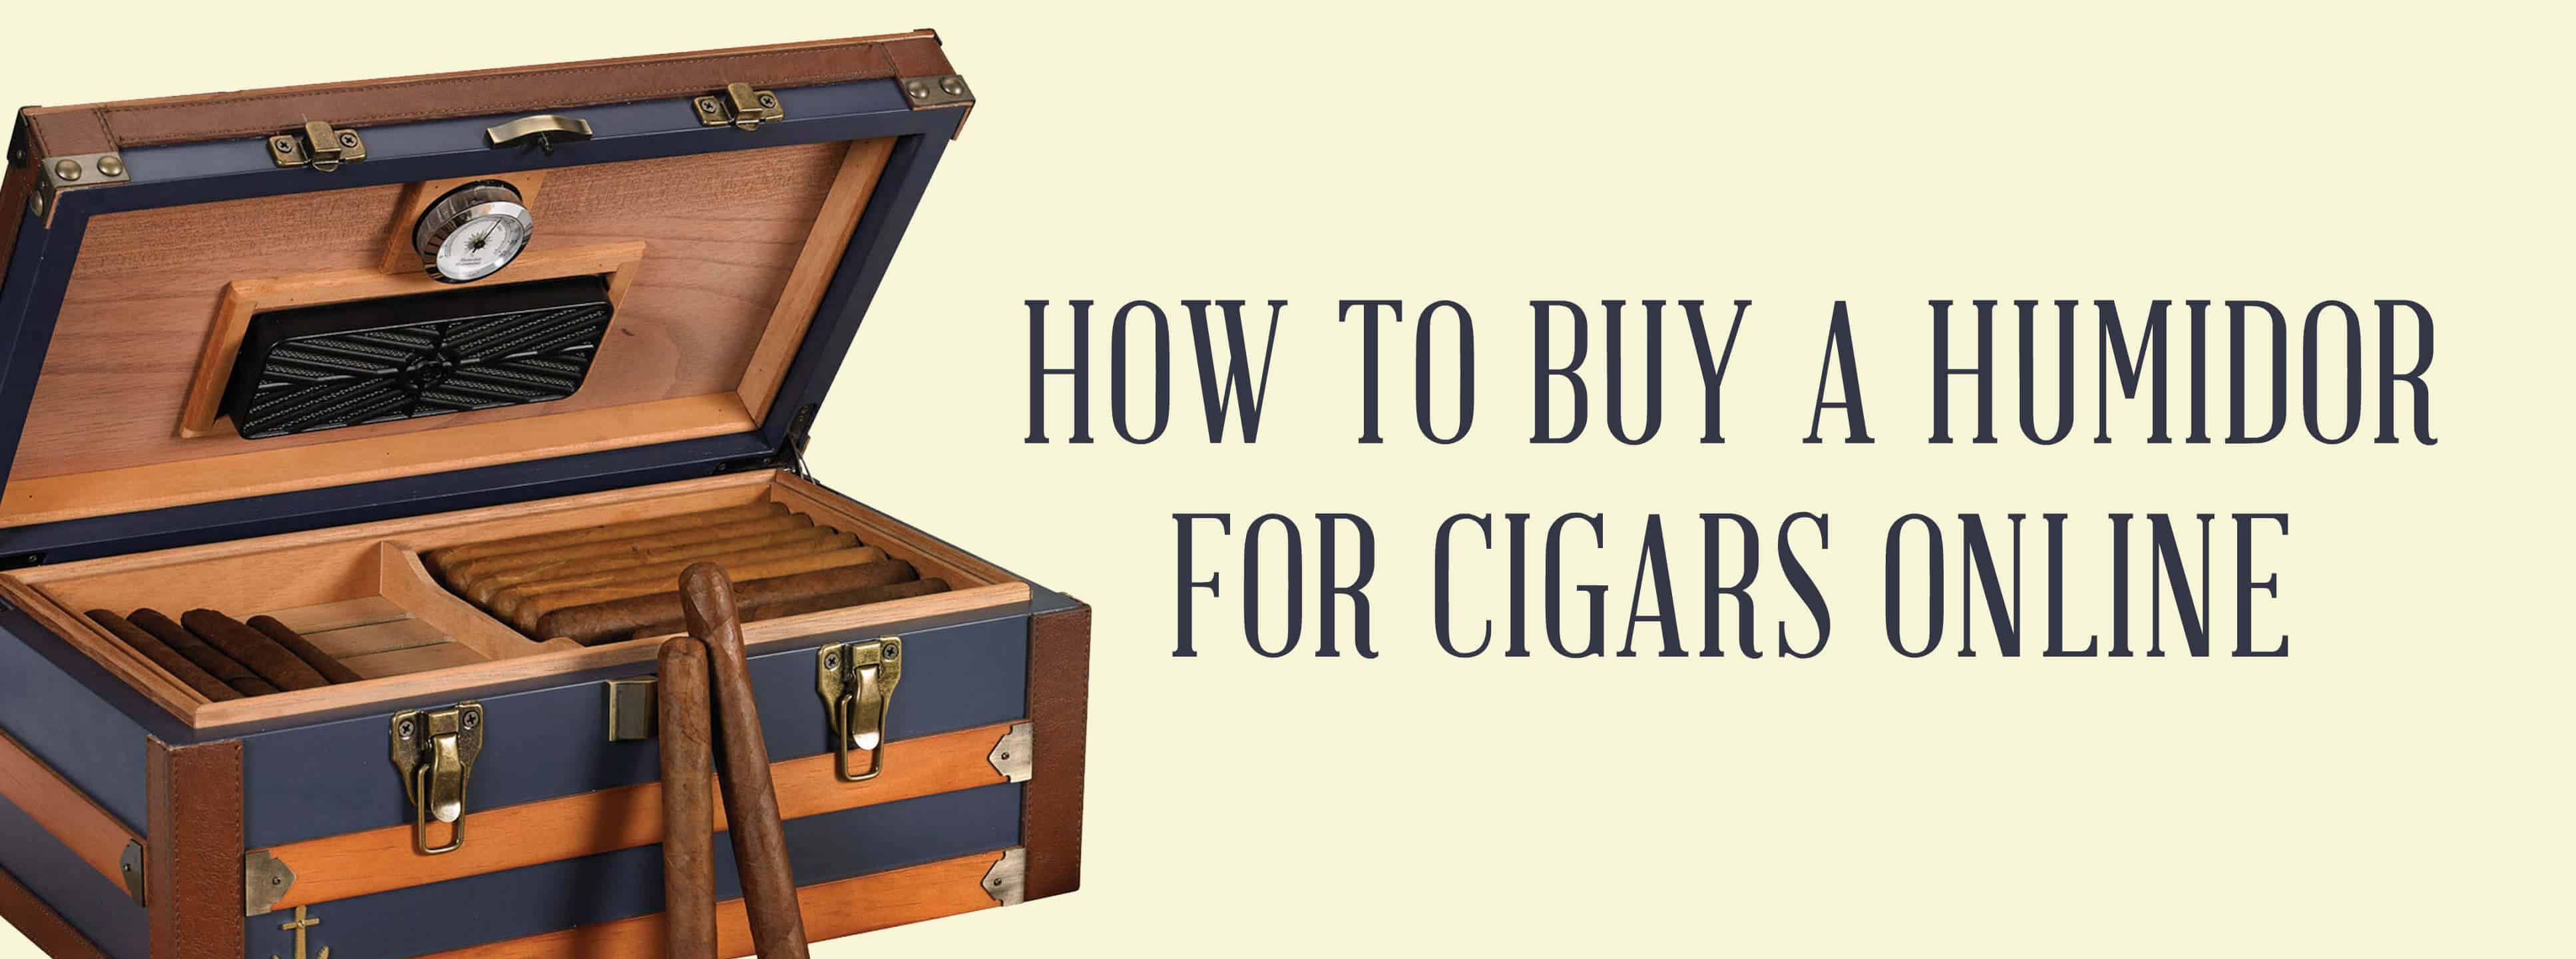 Kurv Undertrykkelse Tragisk How To Buy A Humidor For Cigars